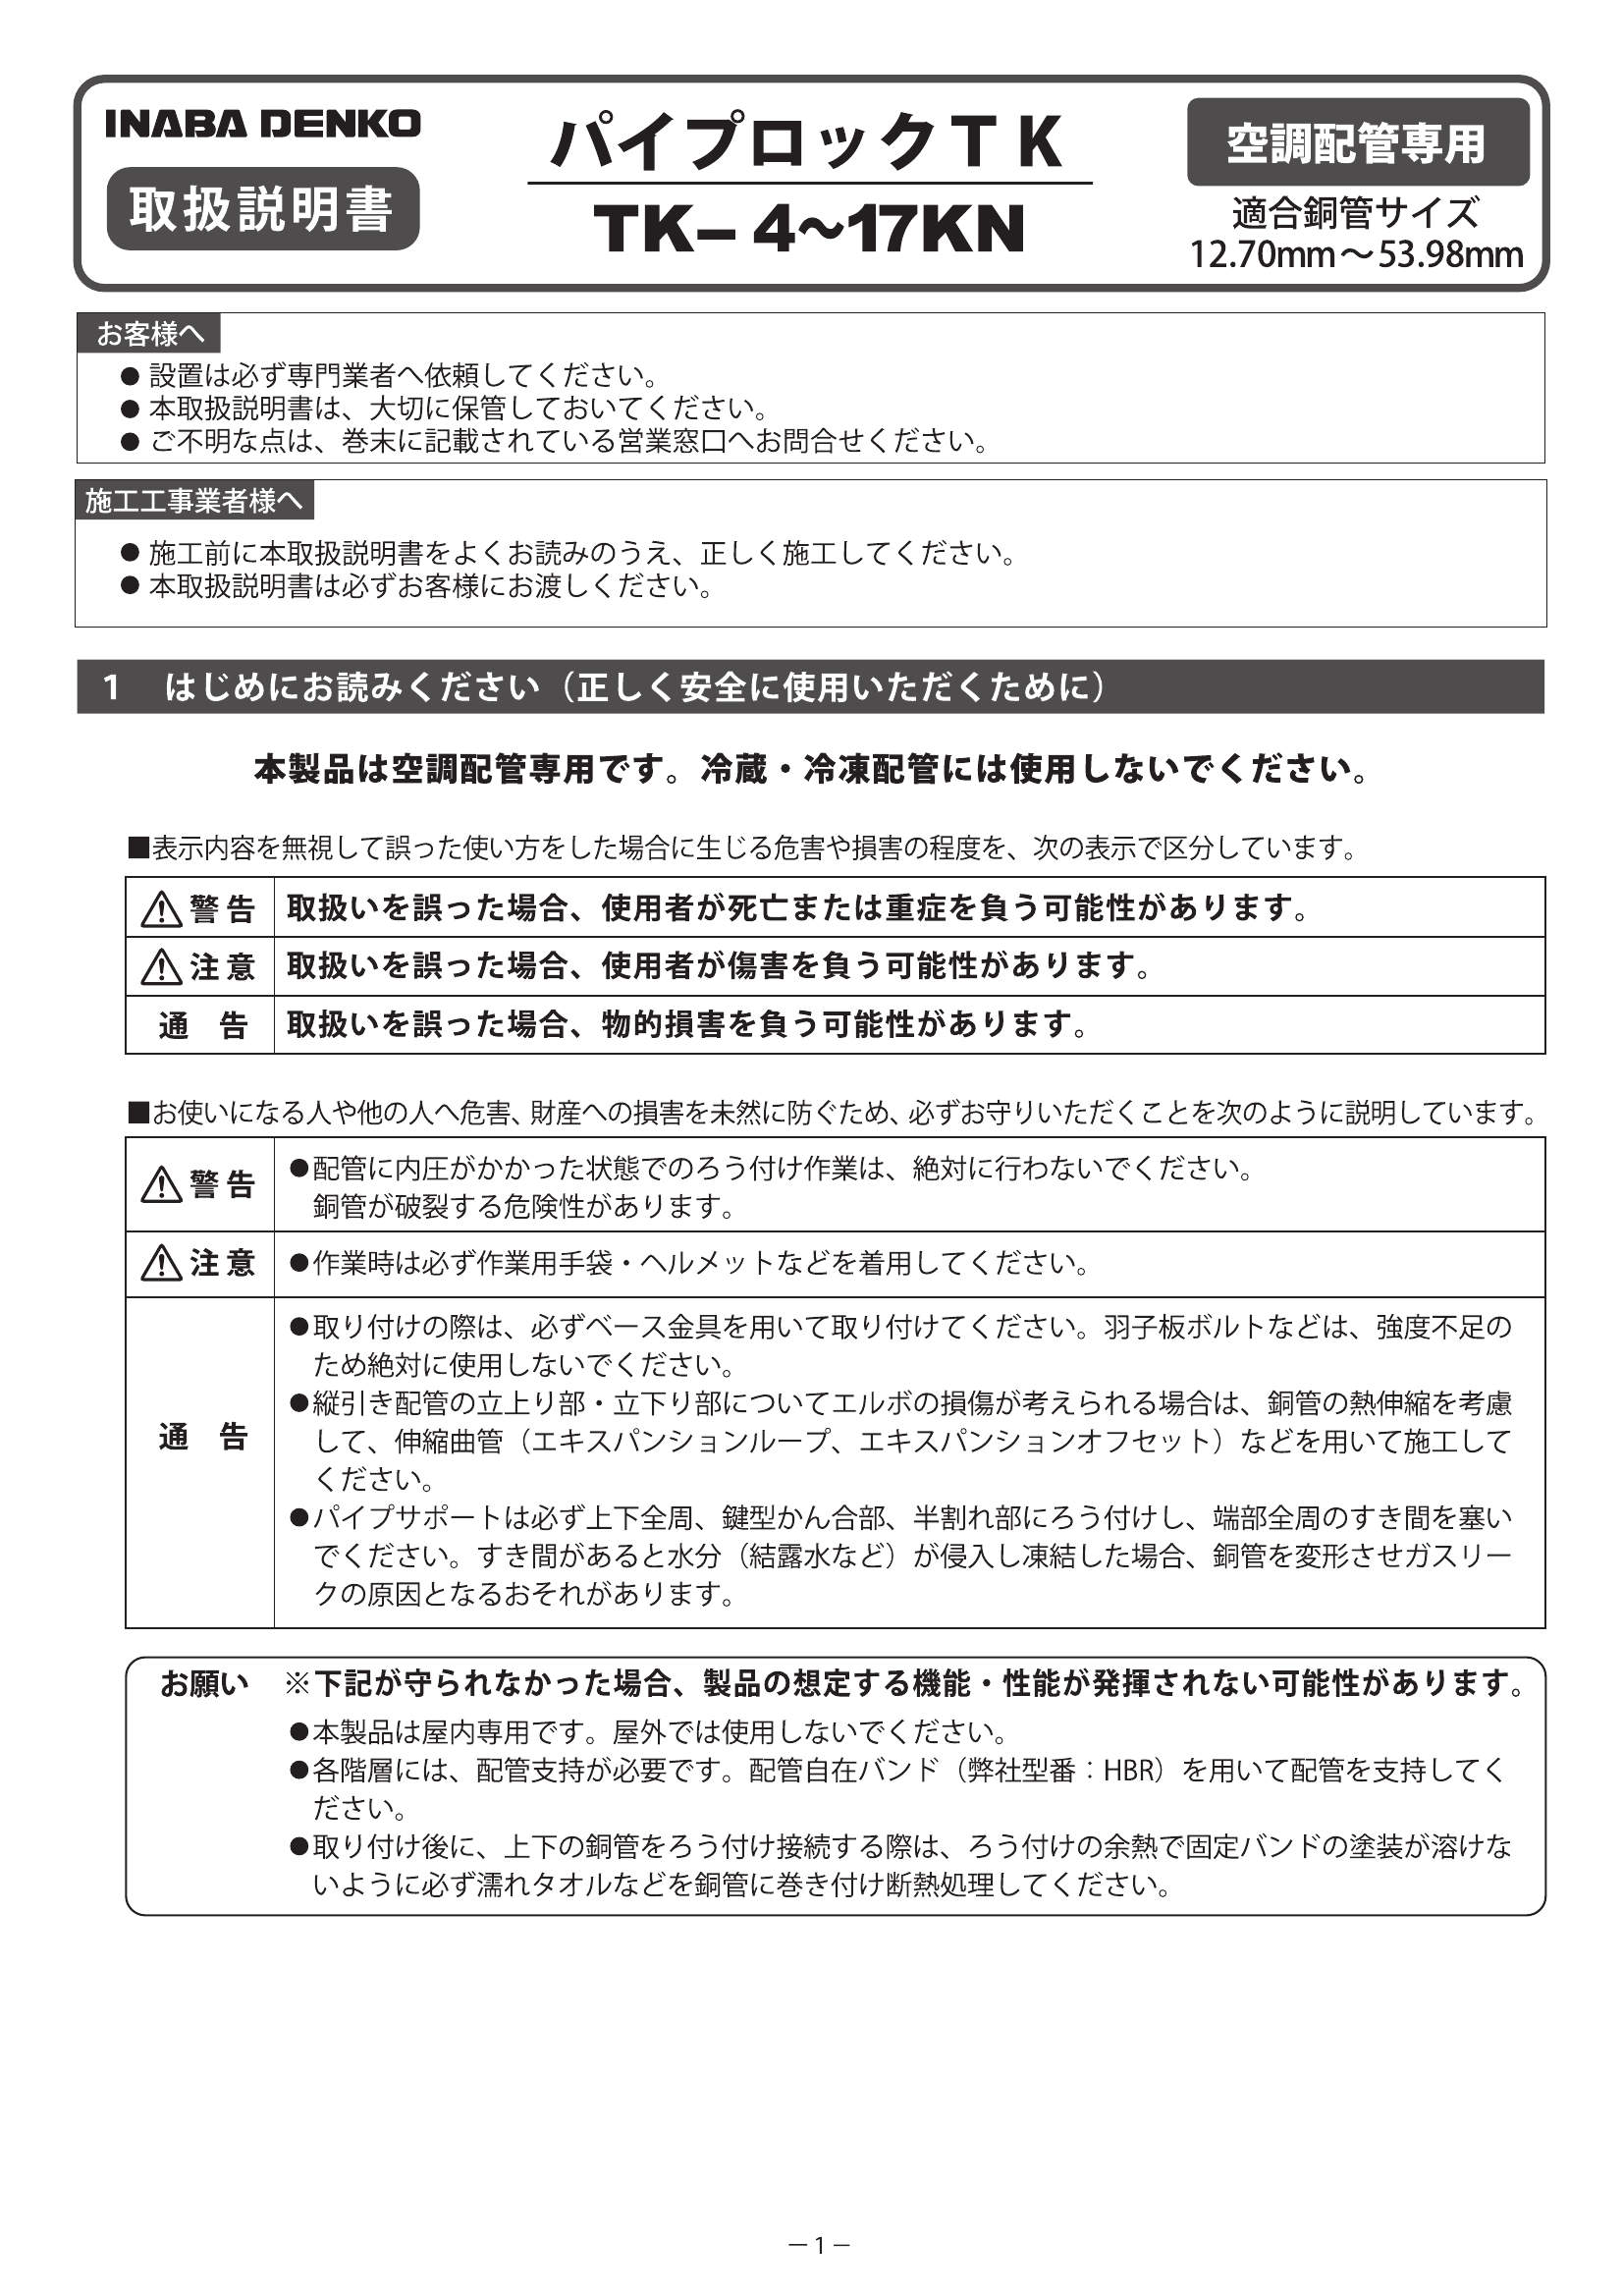 TK-4KN-17KN_取扱説明書_20191030-01w.pdf